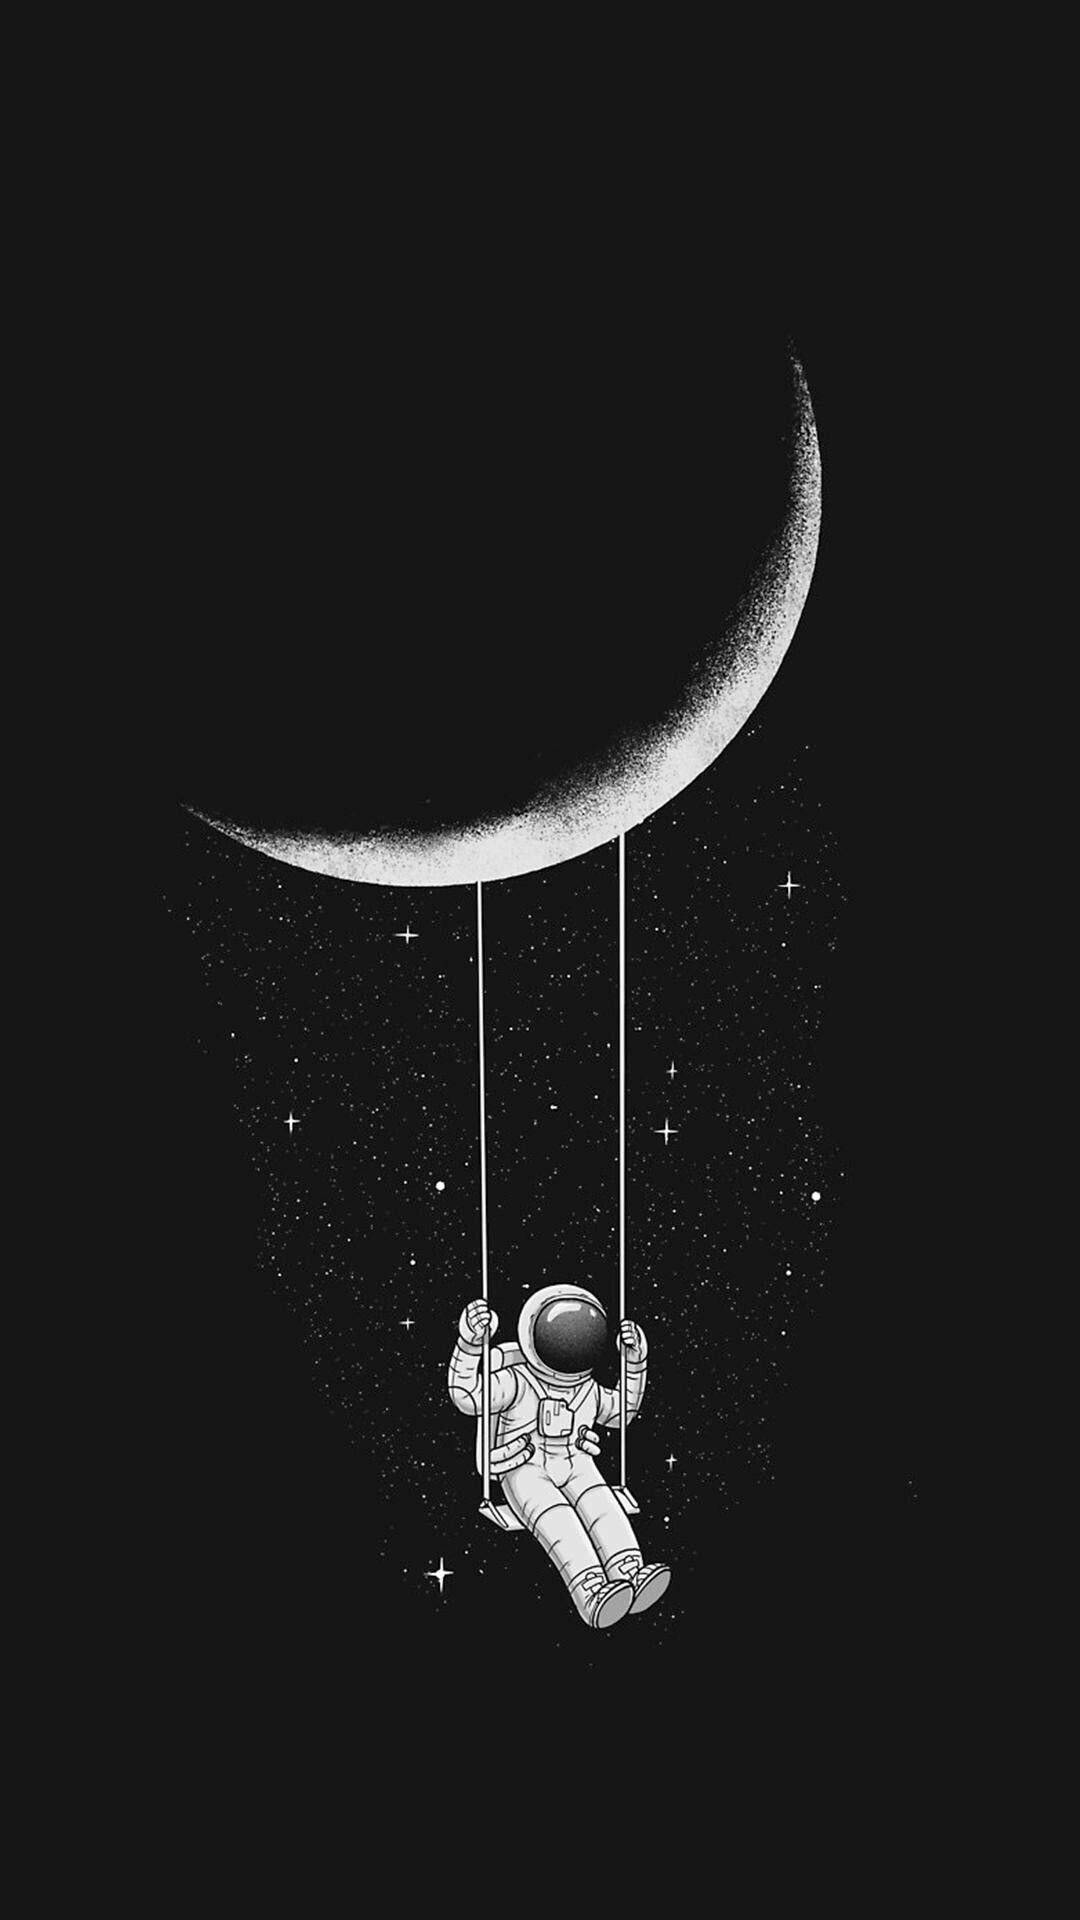 Astronaut Aesthetic Swinging On Crescent Moon Background